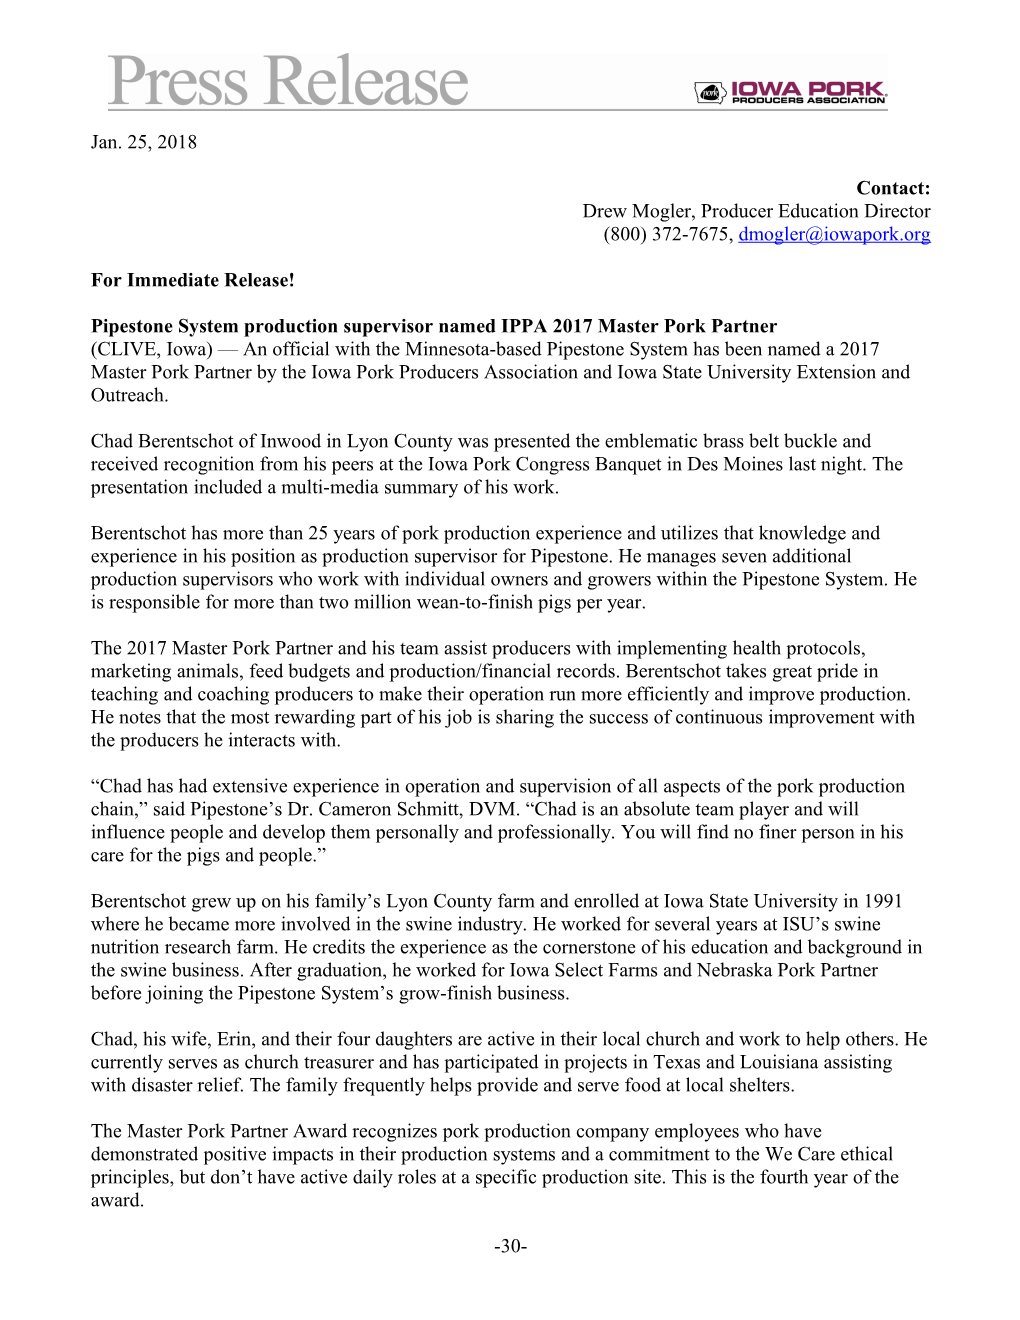 Pipestone System Production Supervisor Named Ippa2017master Pork Partner